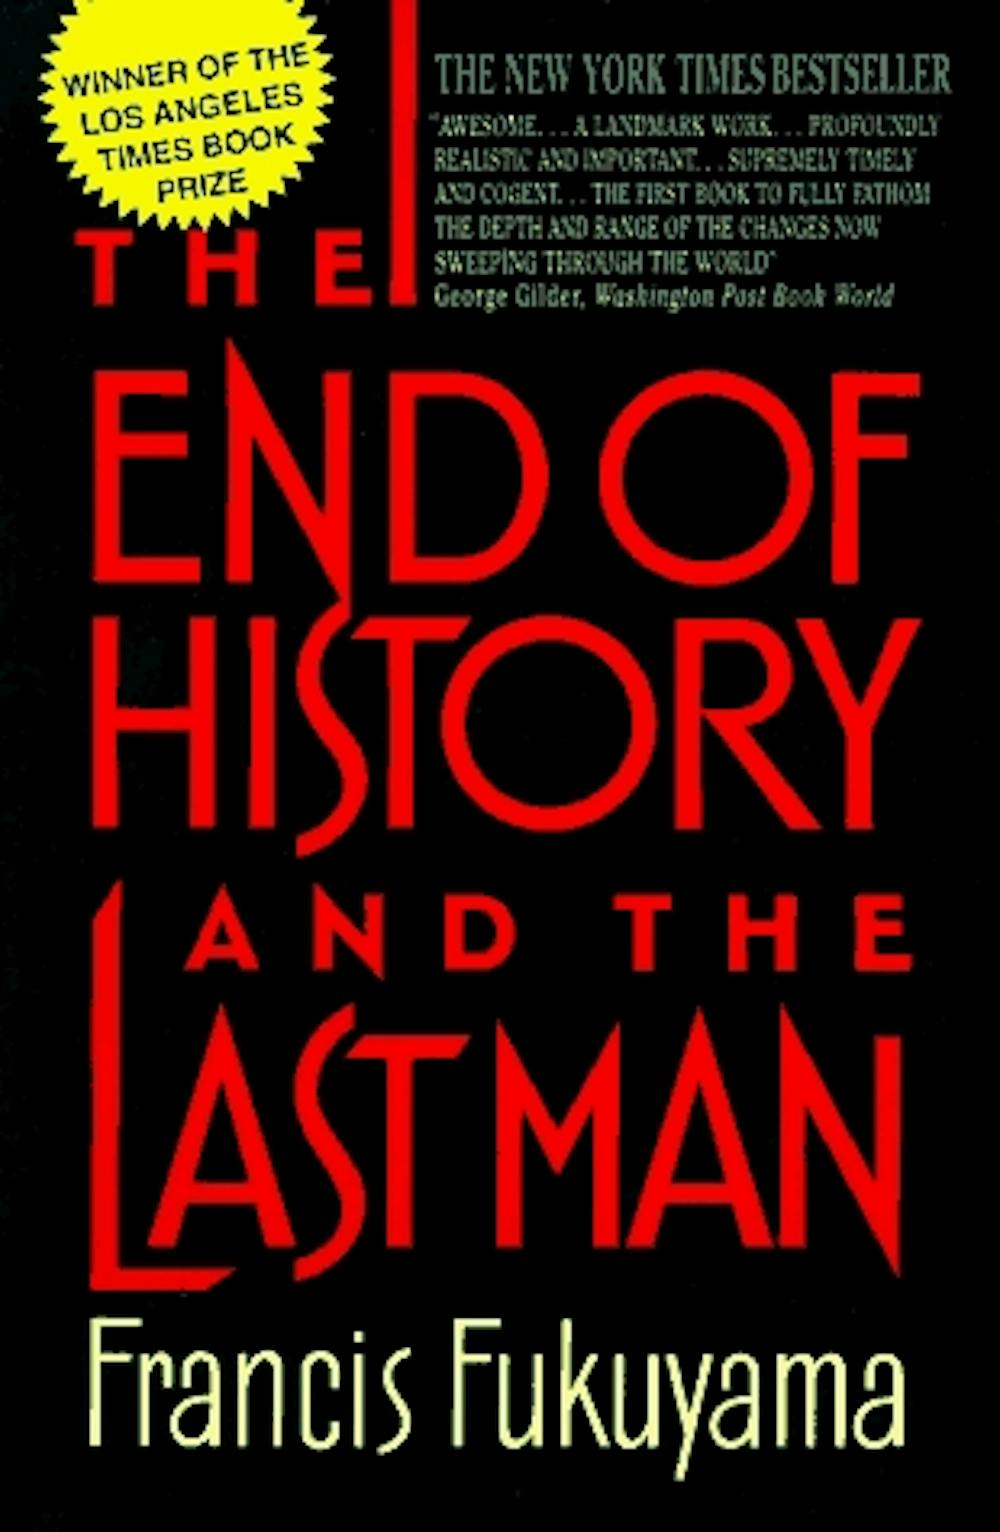 francis fukuyama the end of history 1989 essay